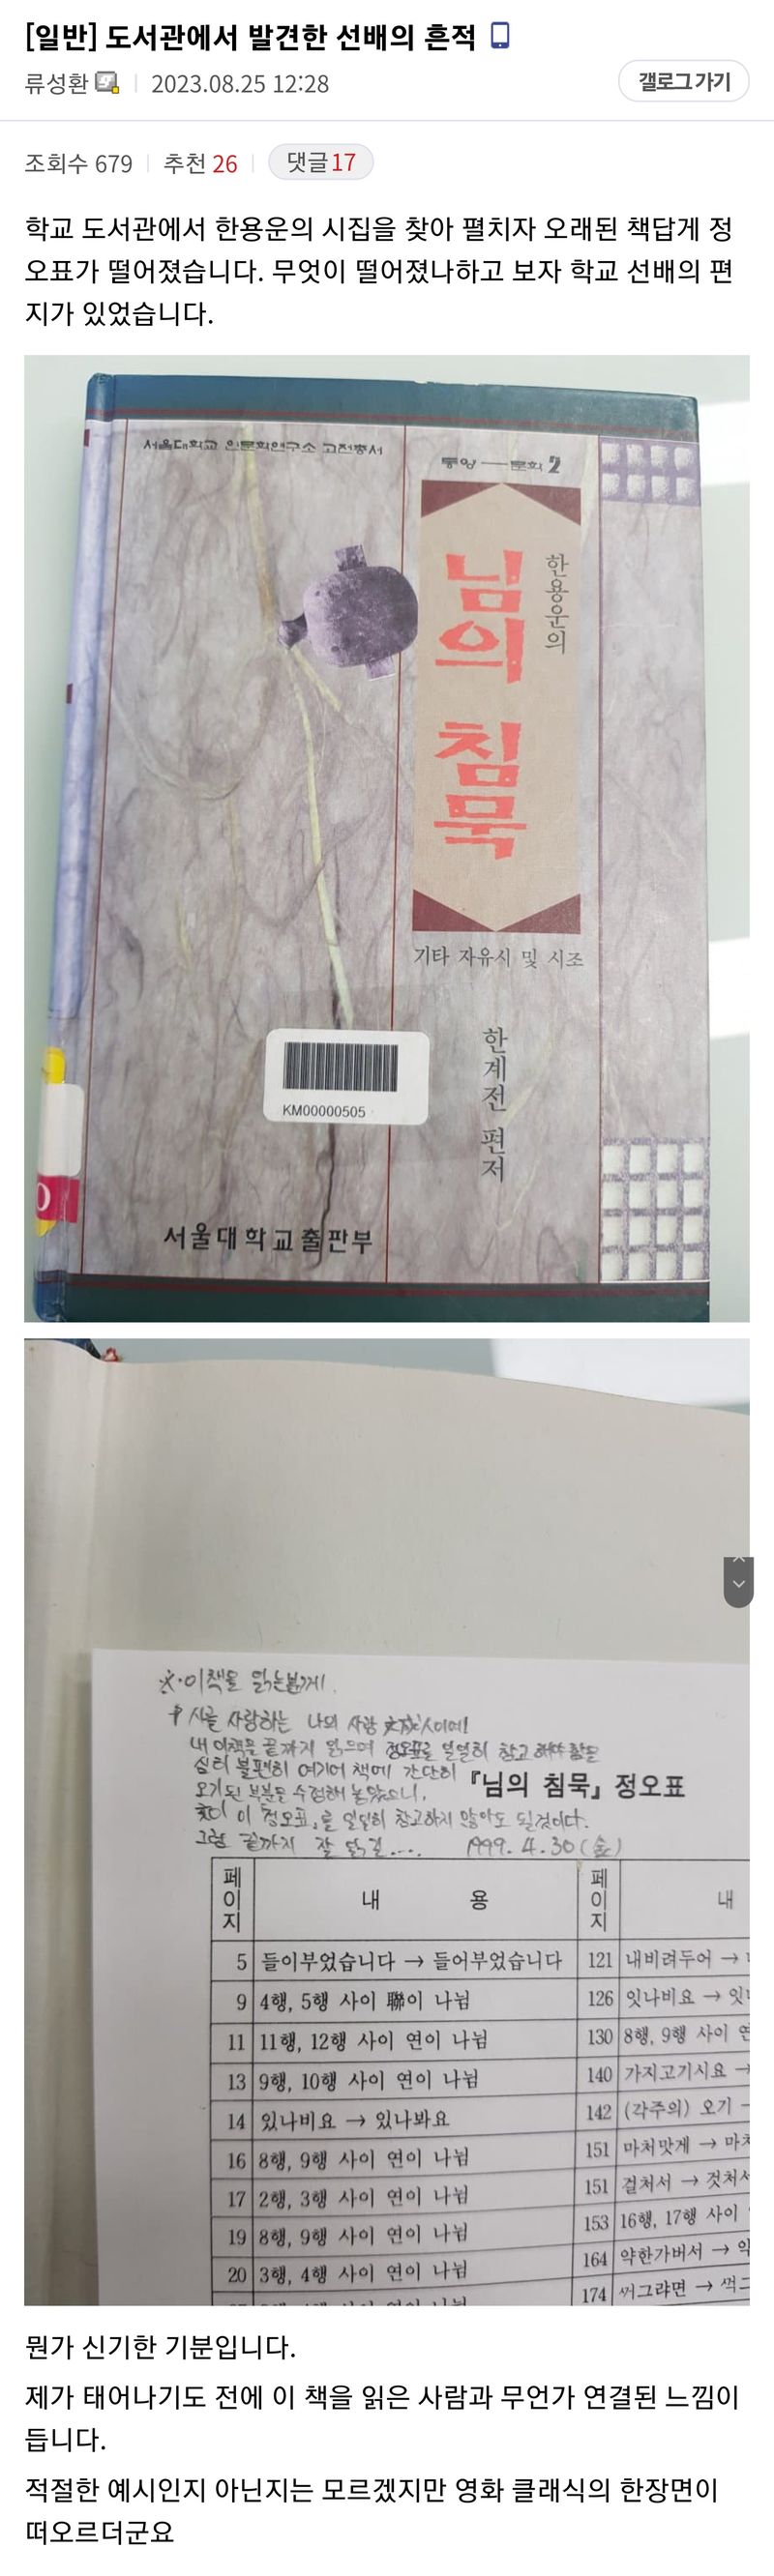 nokbeon.net-도서관에서 발견한 선배의 흔적-1번 이미지